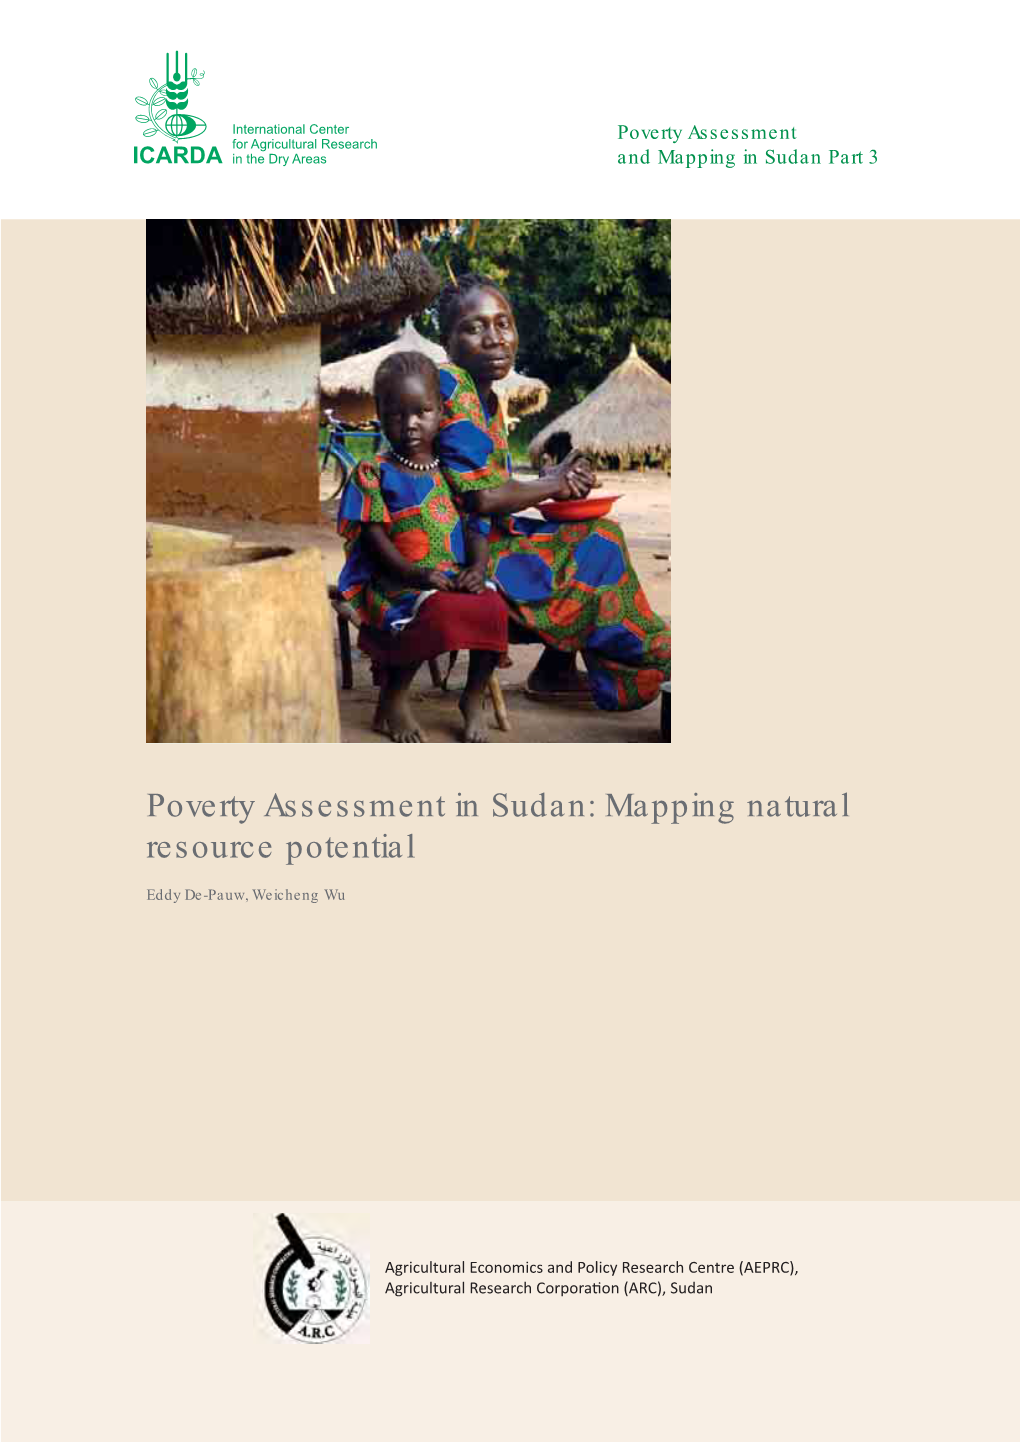 Poverty Maps of Sudan